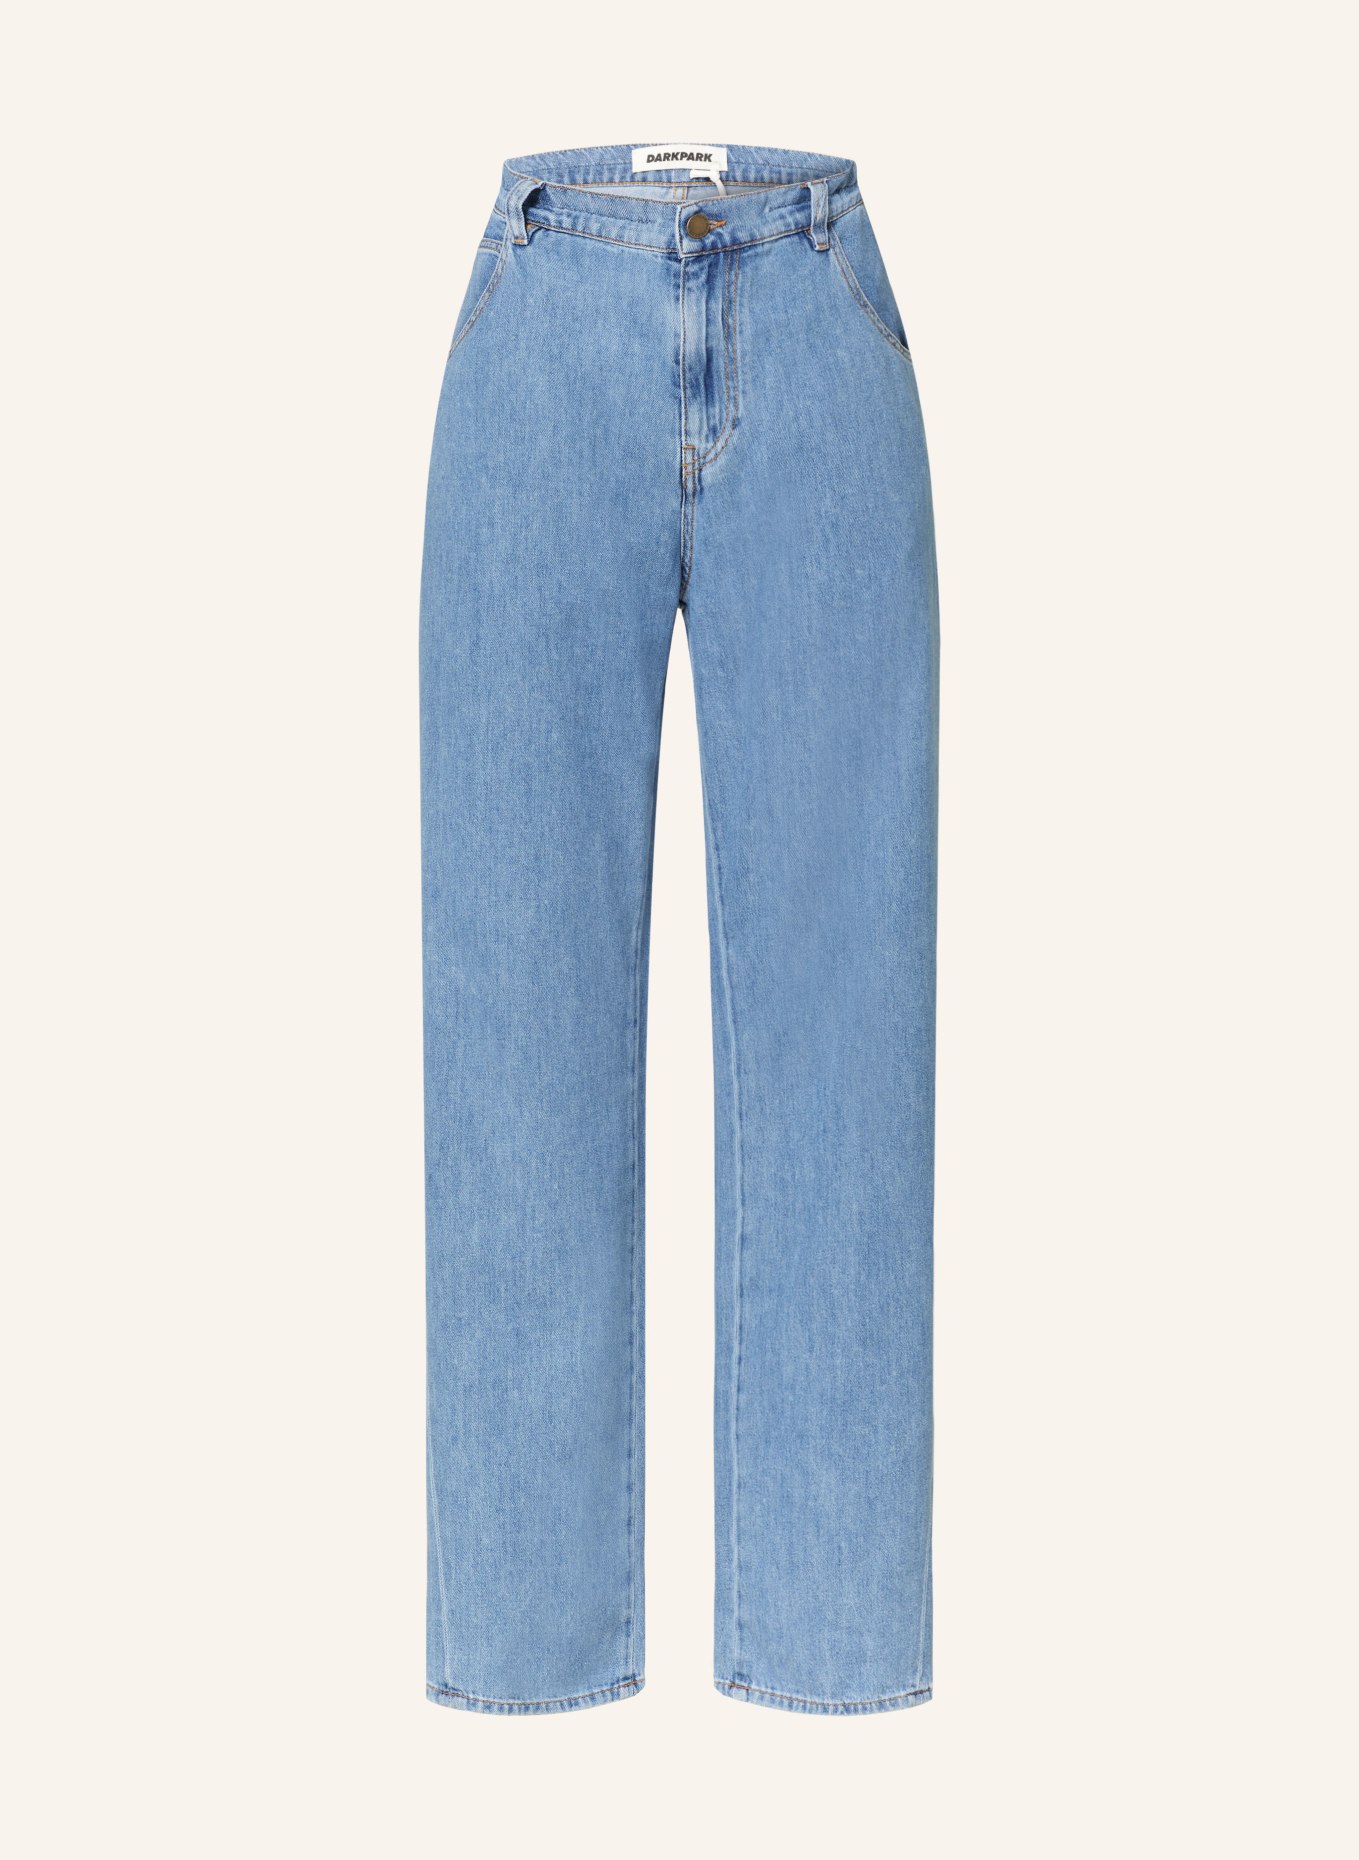 DARKPARK Straight Jeans IRIS, Farbe: W051 LIGHT WASH (Bild 1)